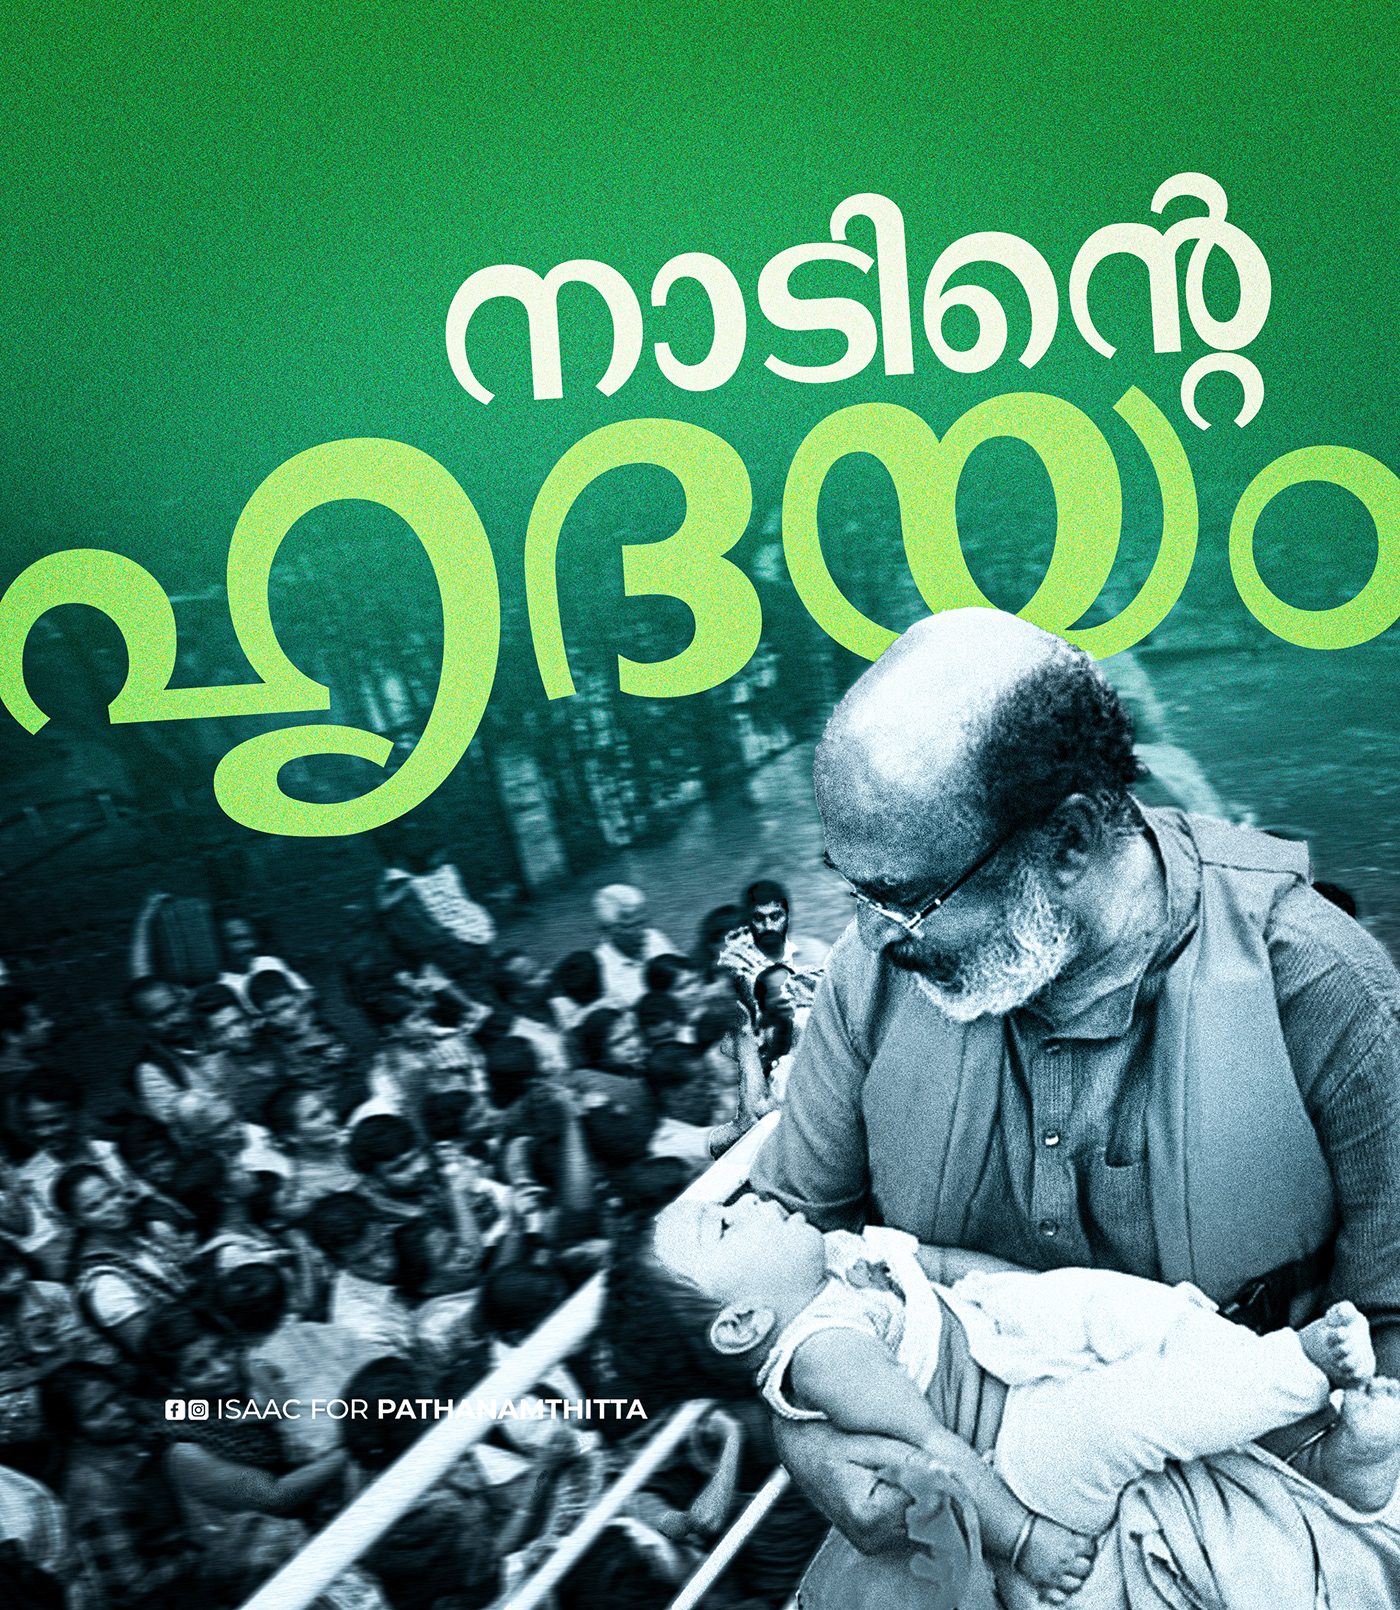 kerala Election malayalam Poster Design Graphic Designer Social media post Socialmedia Lok Sabha Election 2024